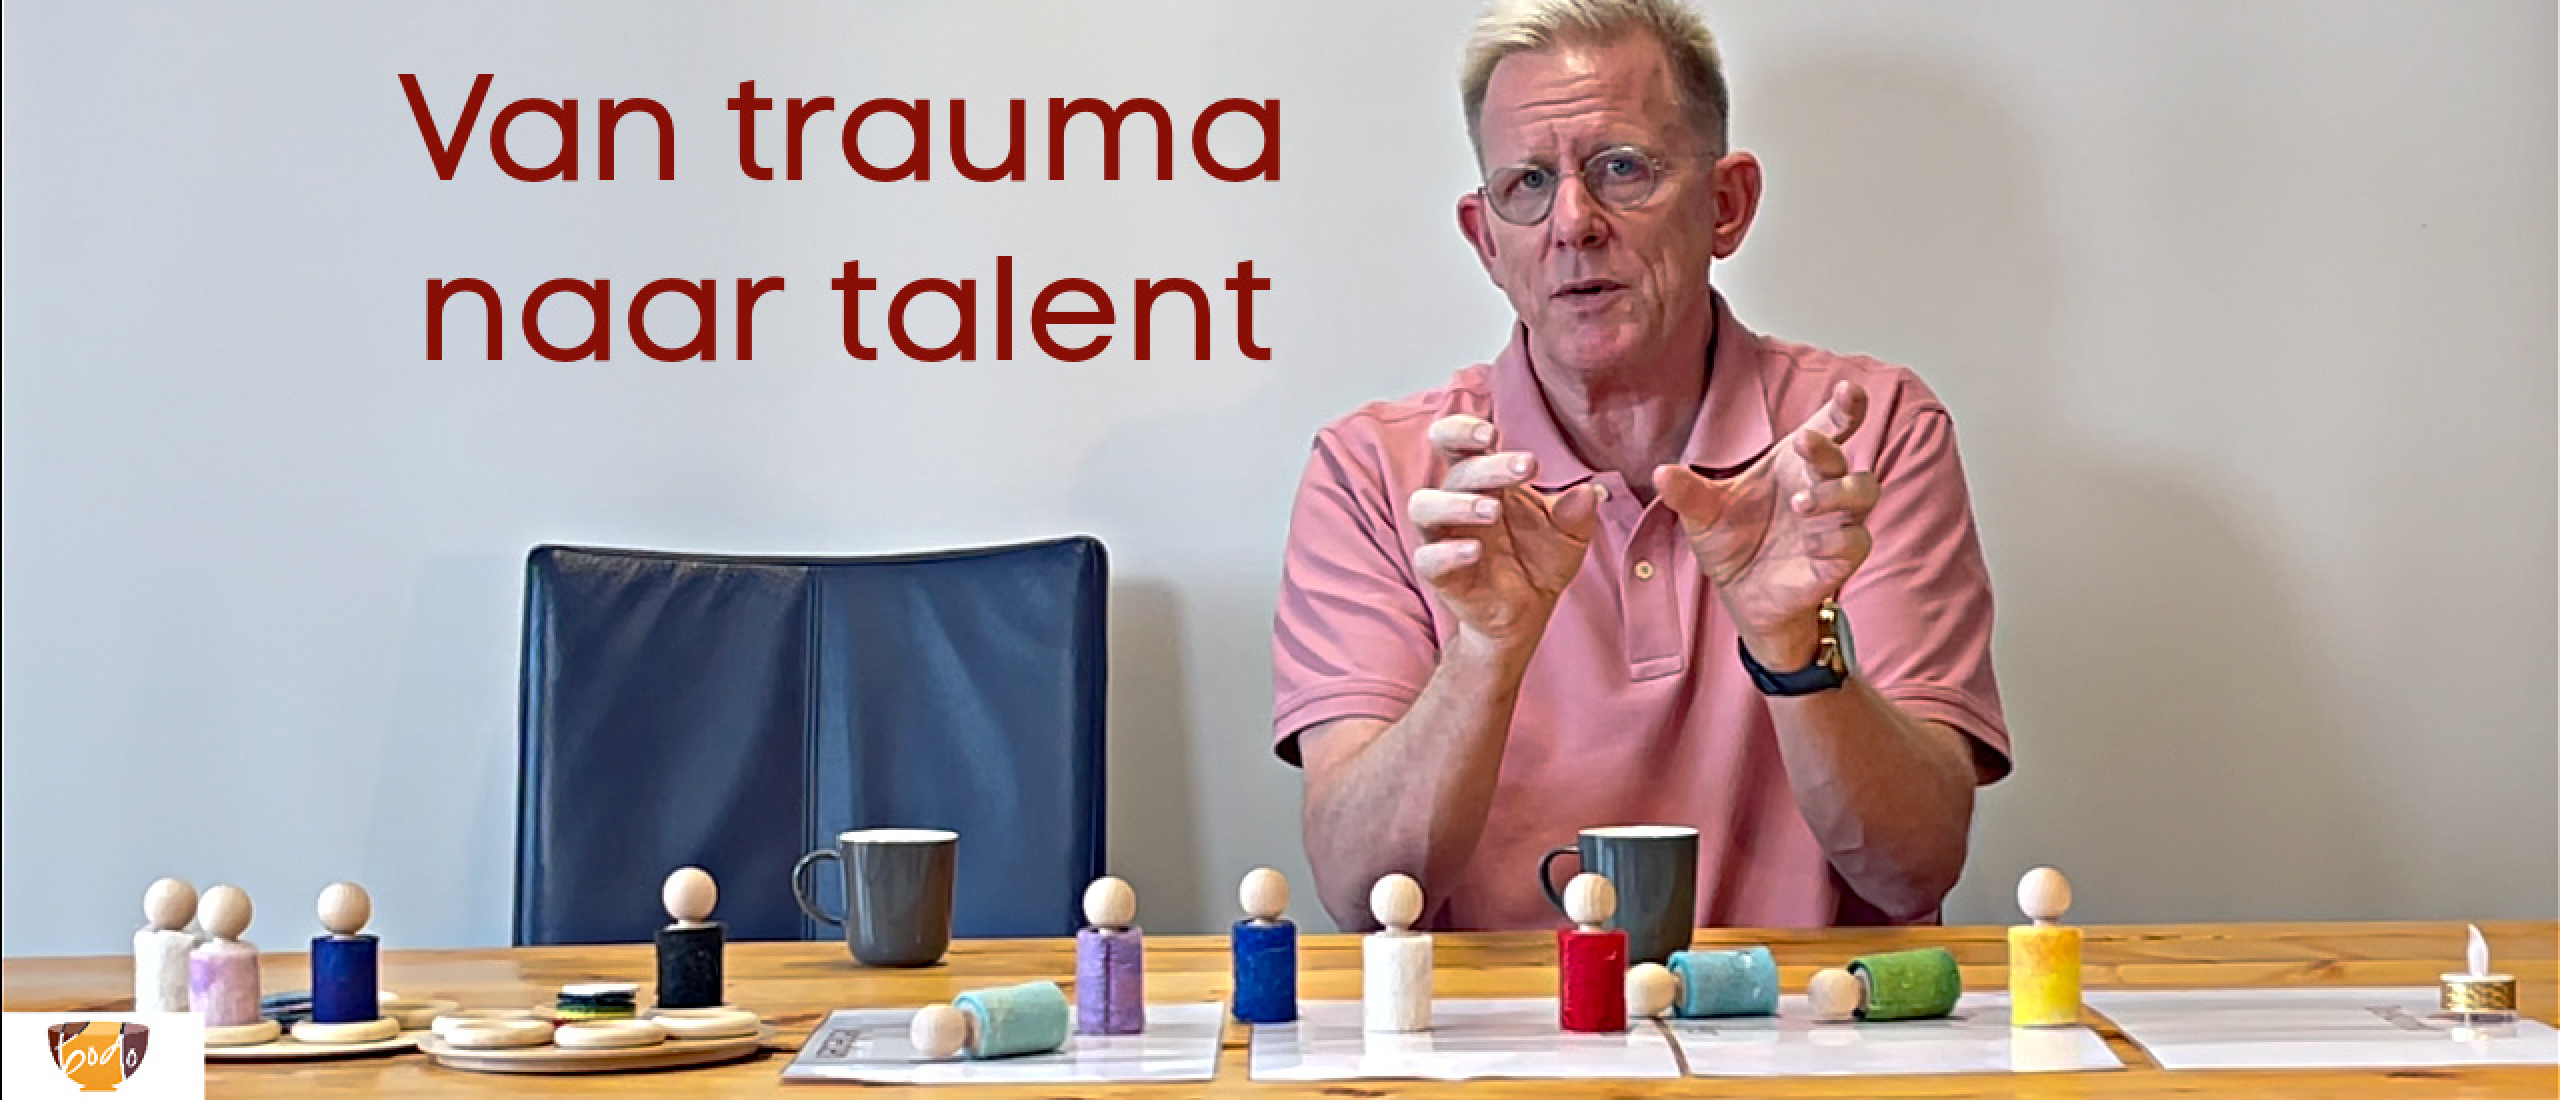 Van trauma naar talent